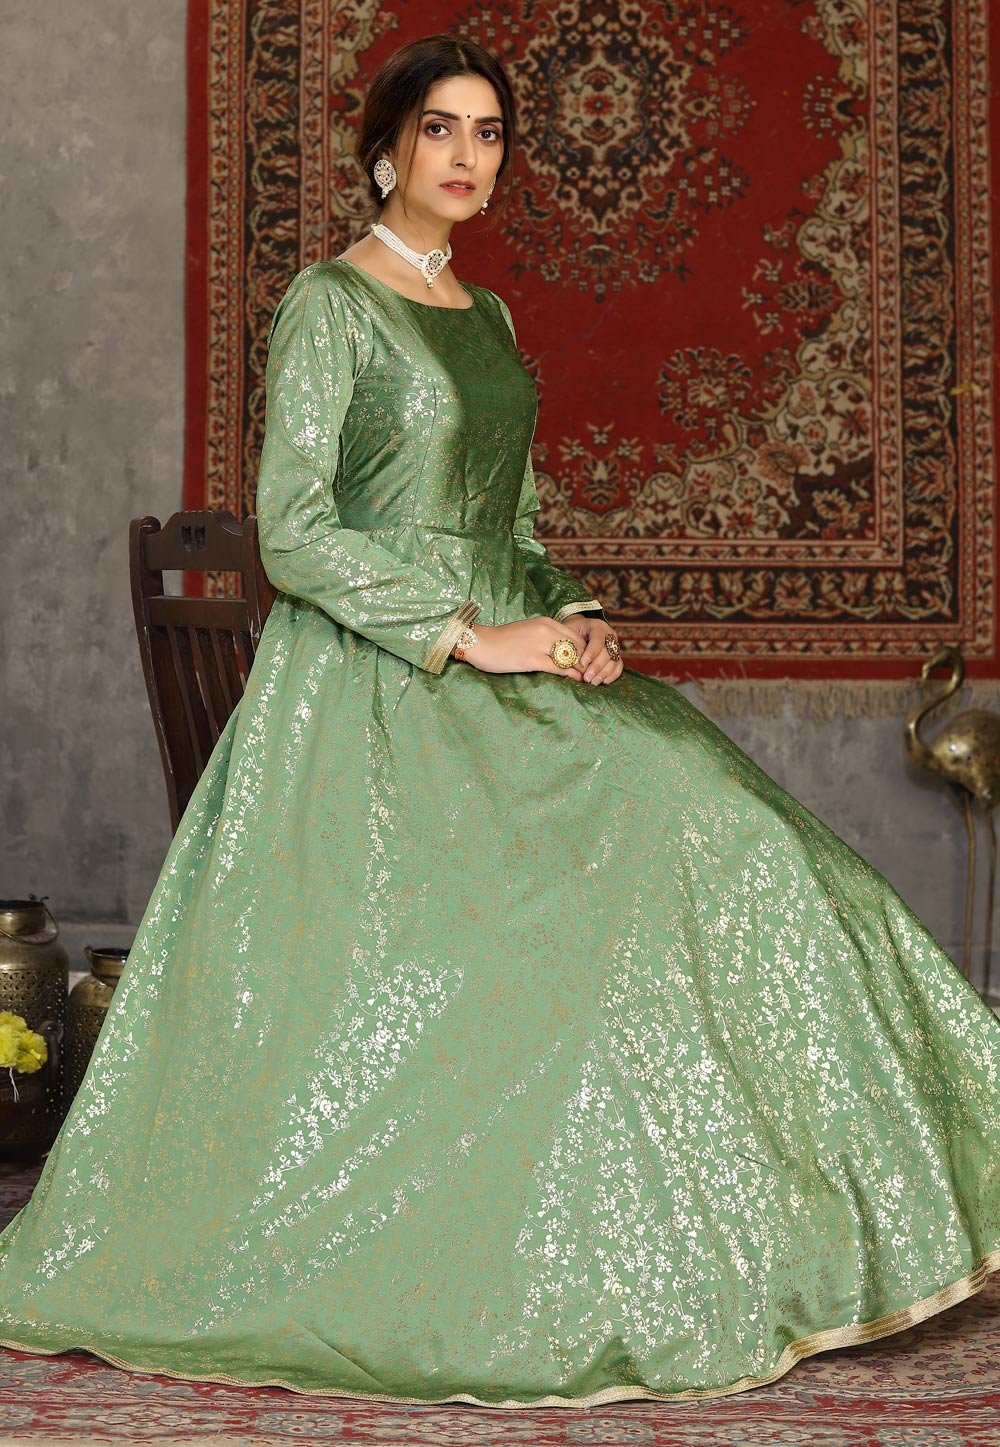 Shivangi Joshi Turns Heads In A Green Gown